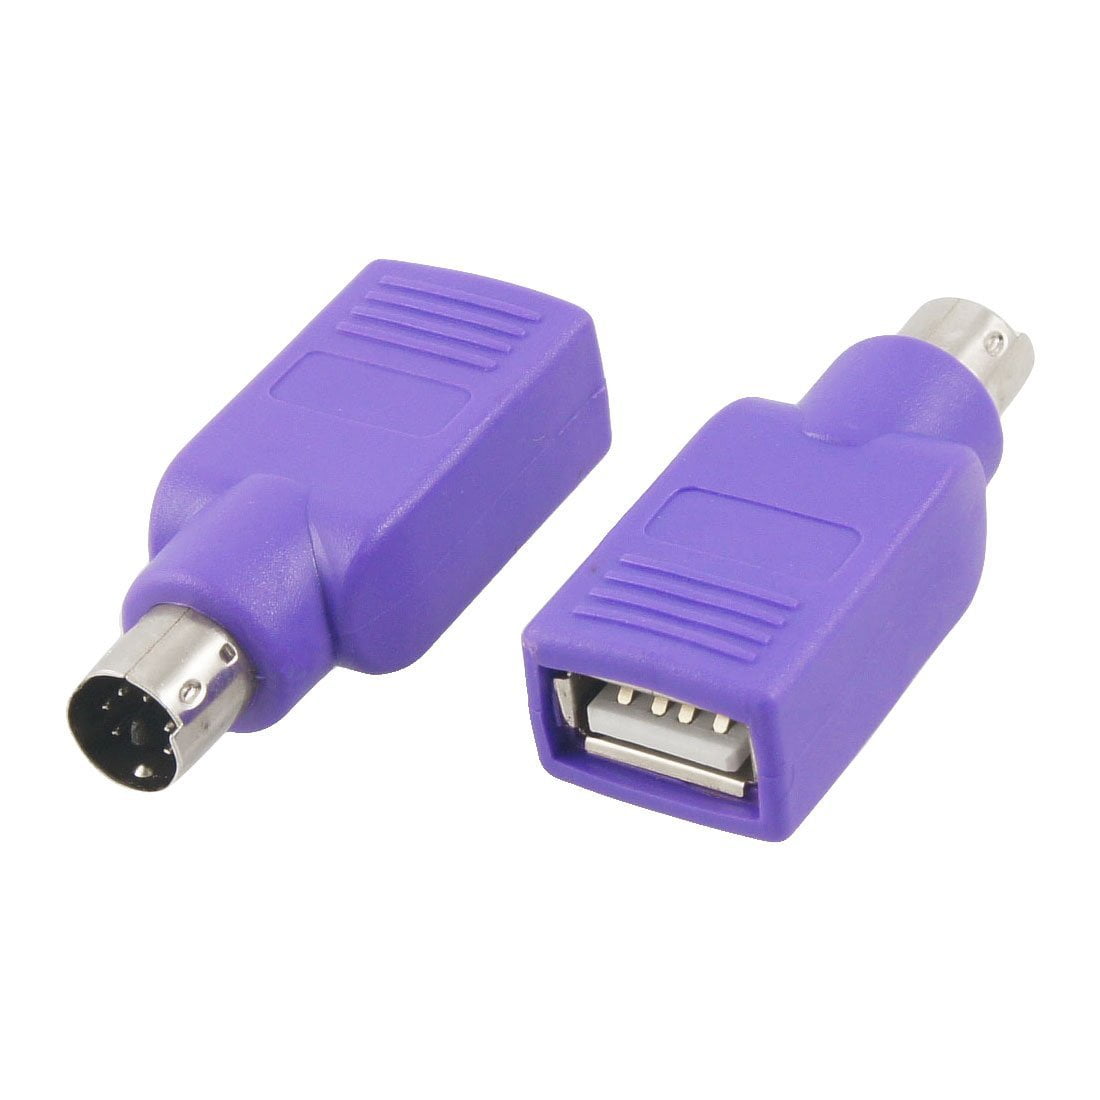 Keyboard USB to PS2 Adapter Converter, Color Walmart.com